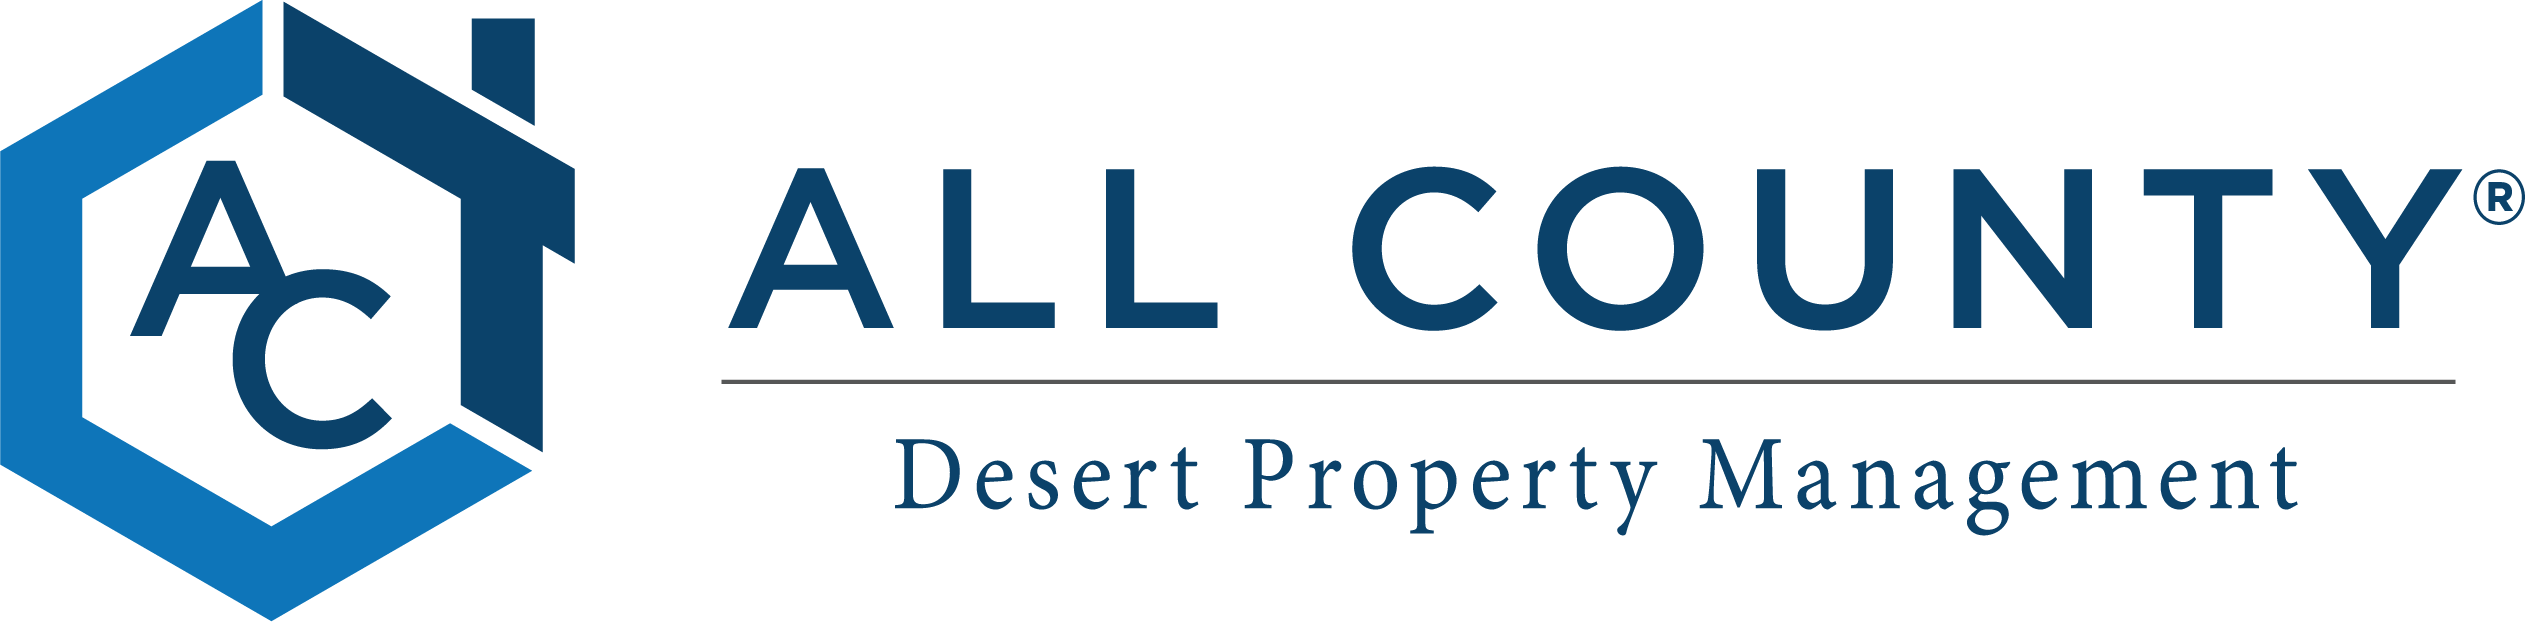 All County Desert Property Management